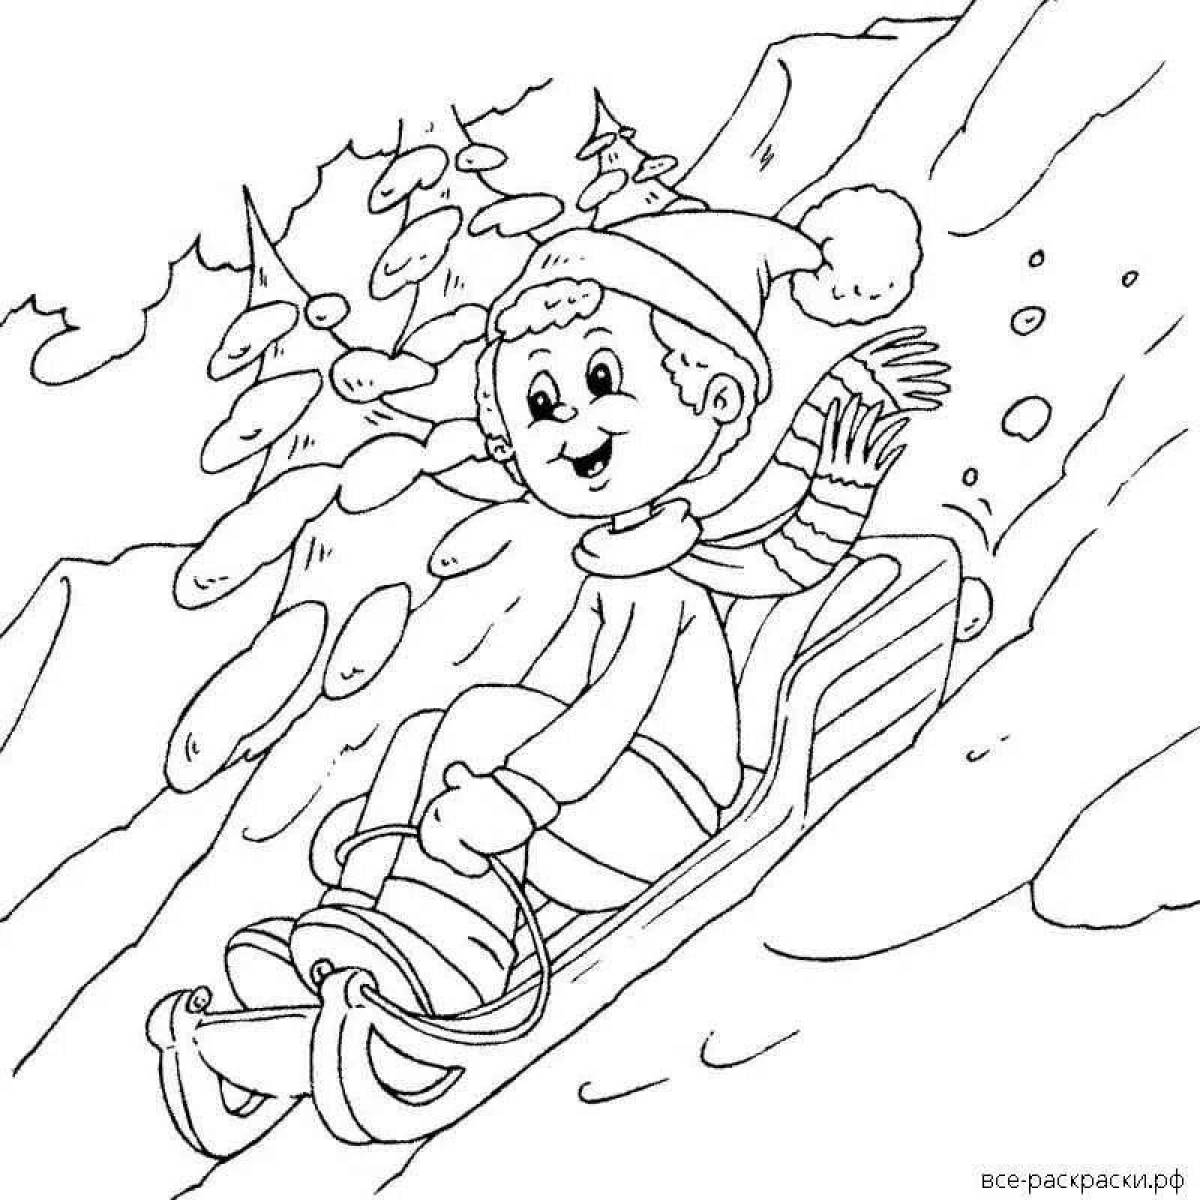 Wonderful boy on a sleigh coloring book